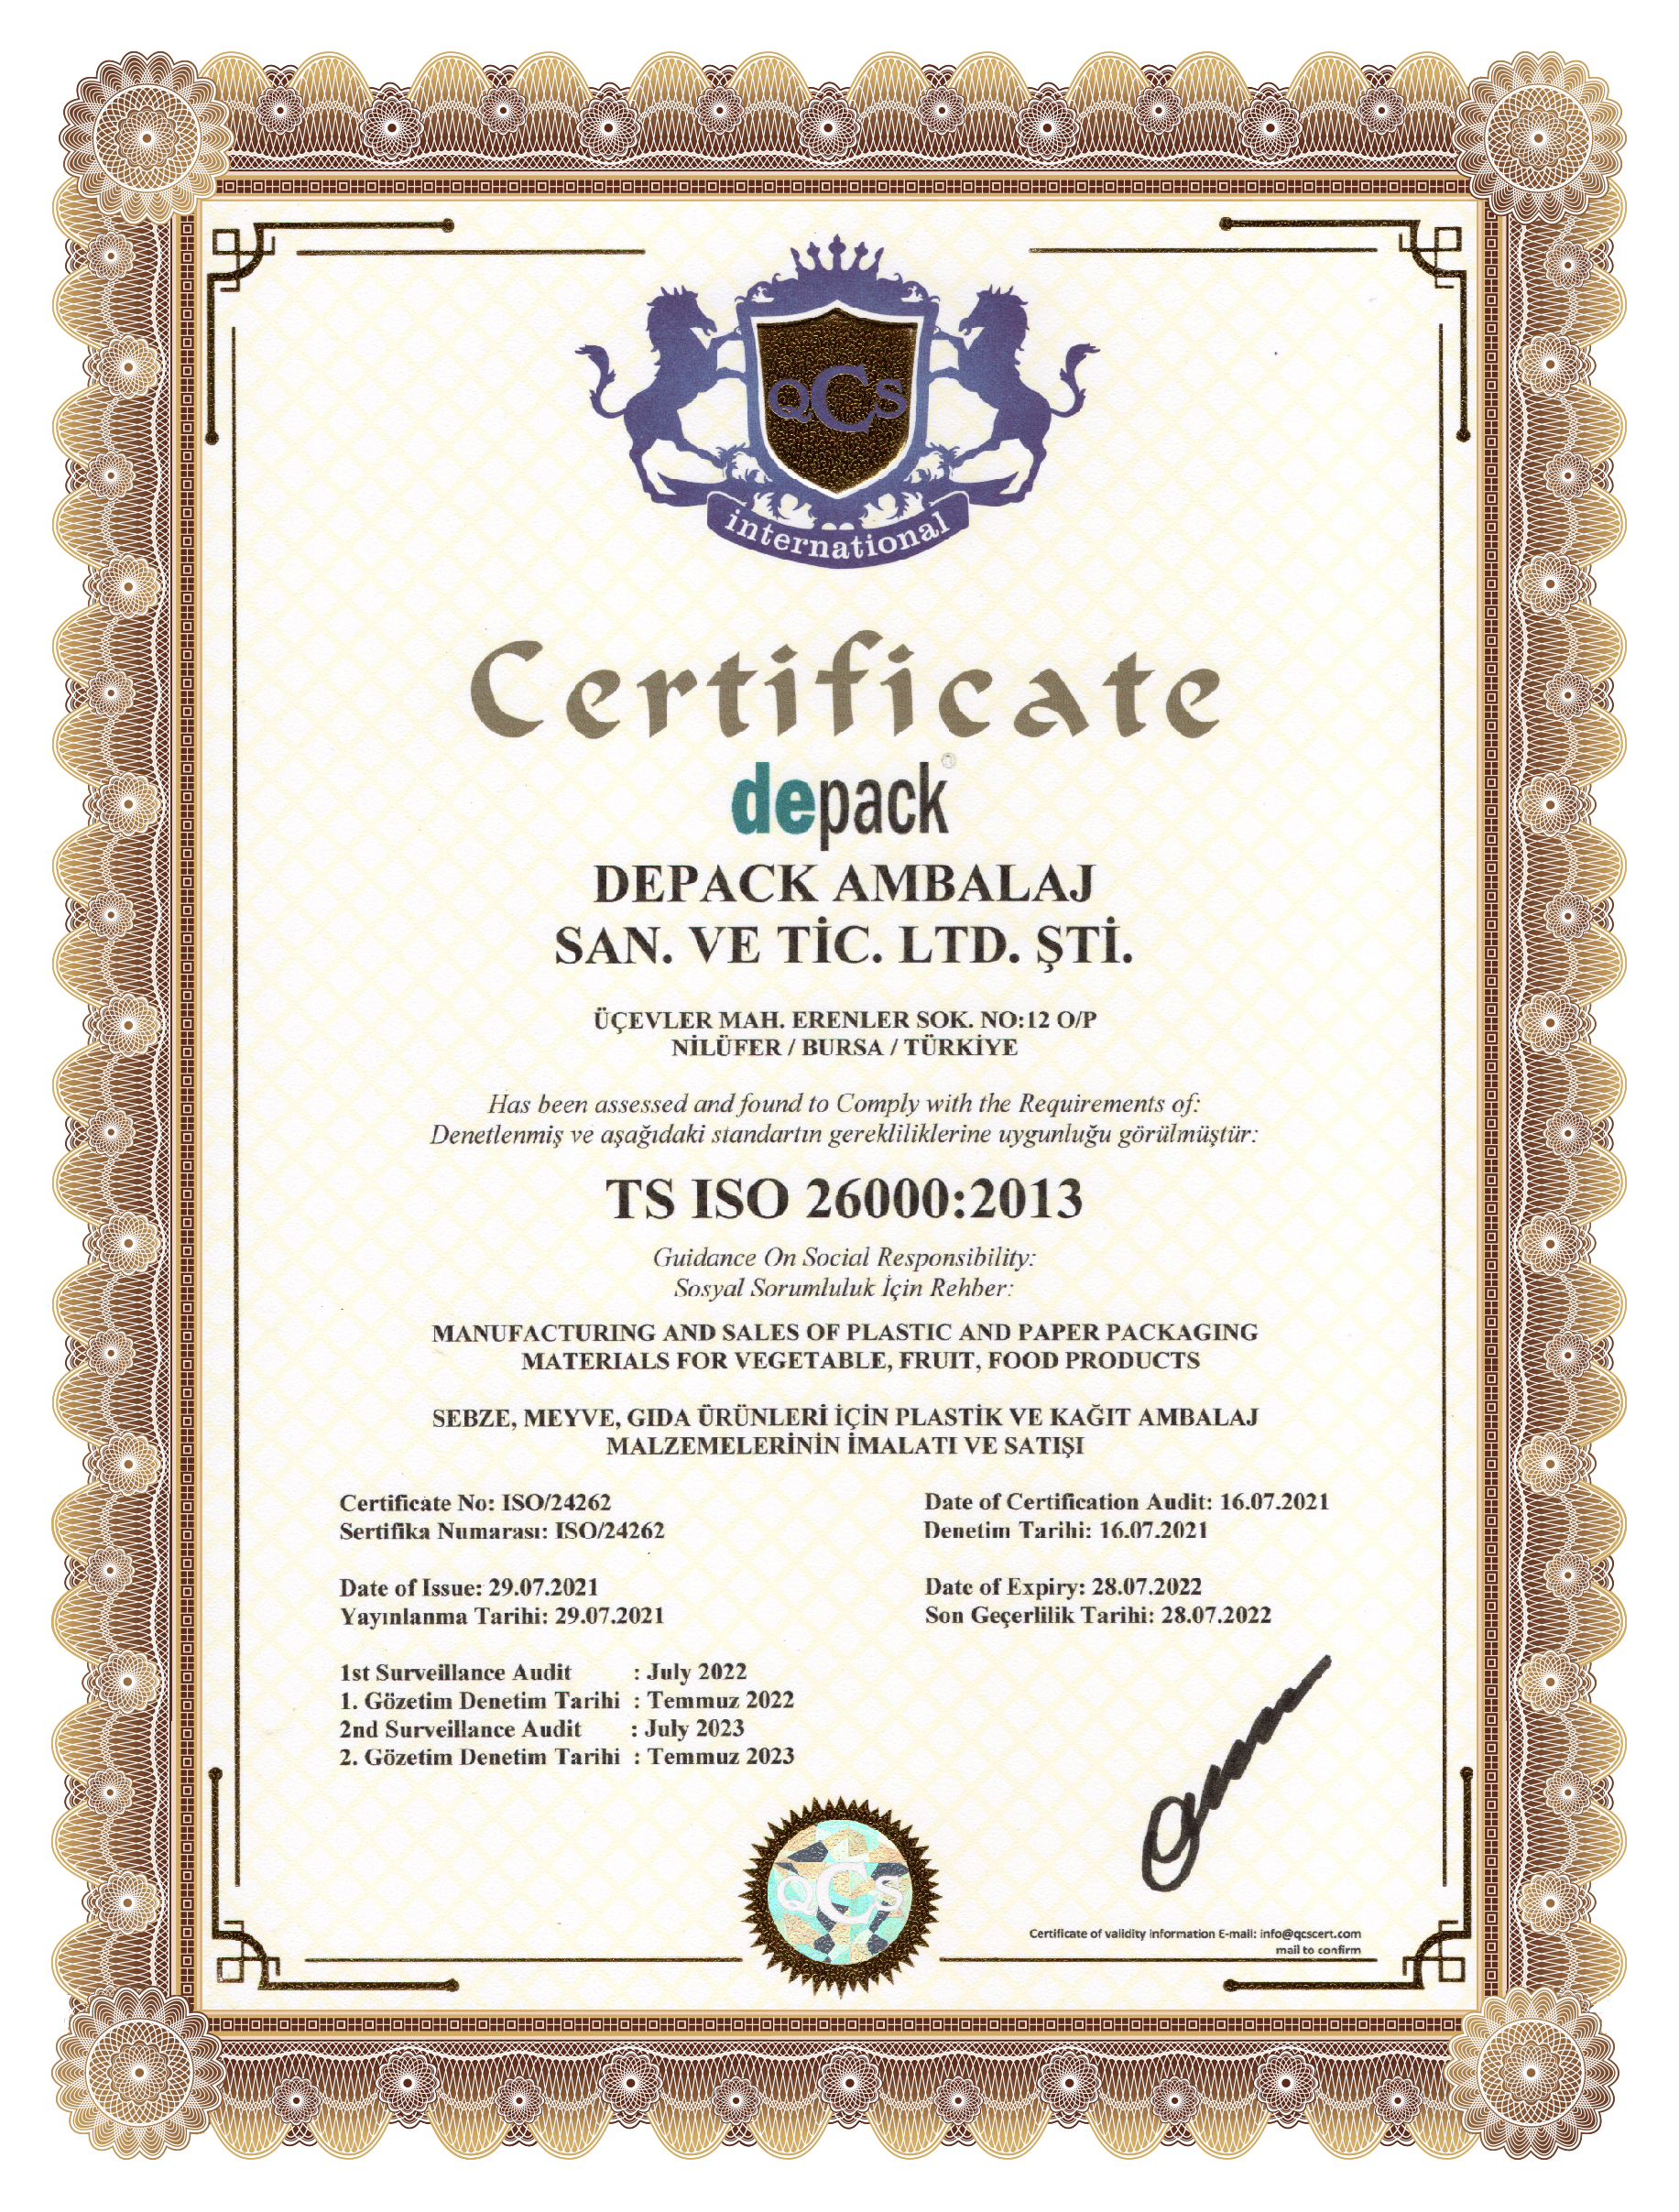 Depack TS ISO 26000:2013 Certificate